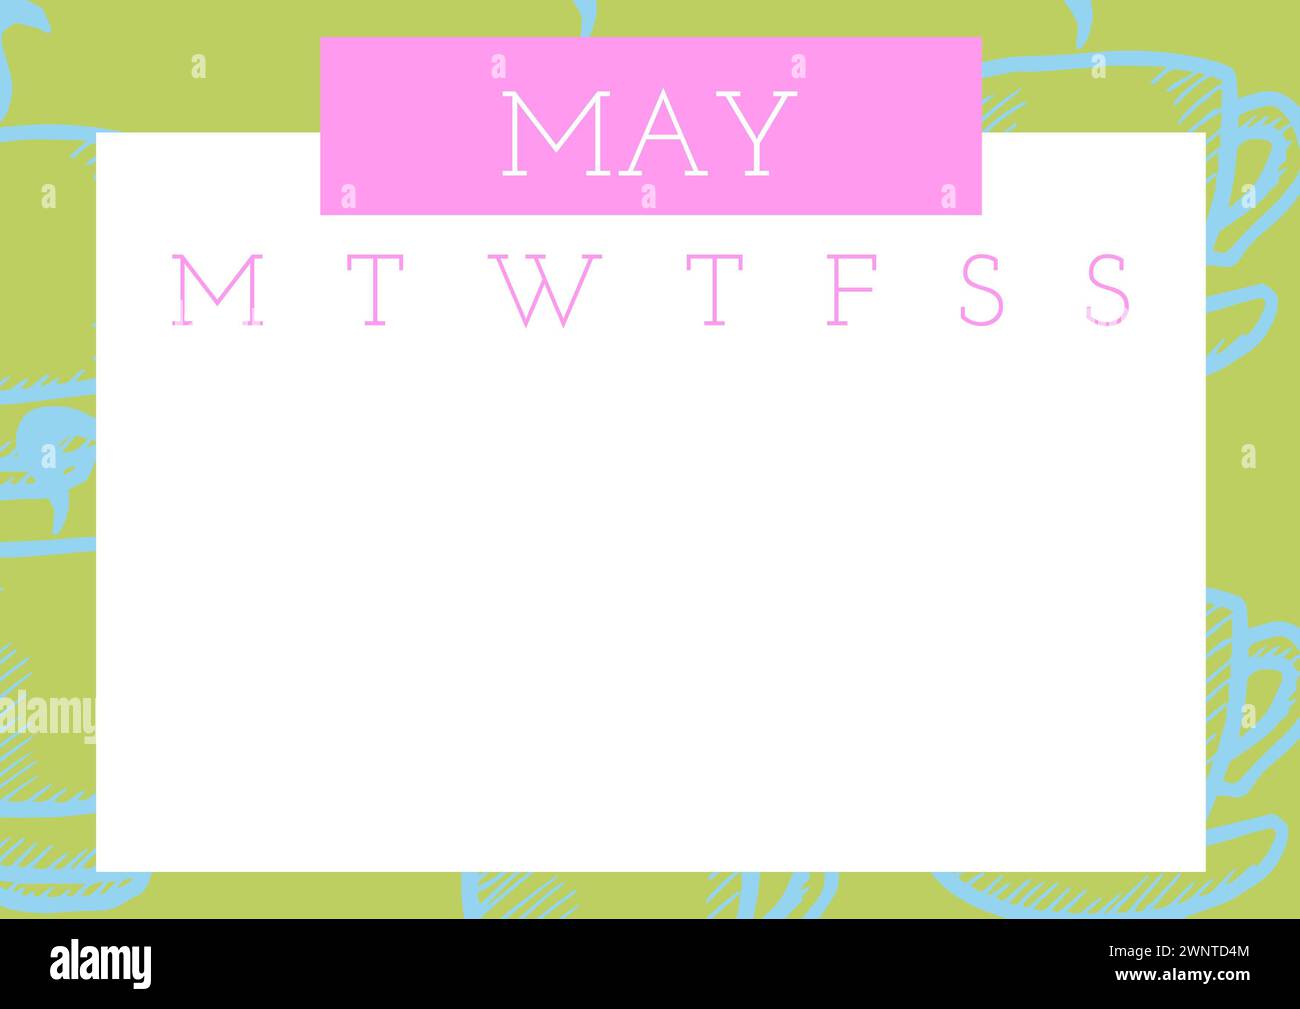 Plan May's agenda, pastel calendar layout, spring freshness Stock Photo